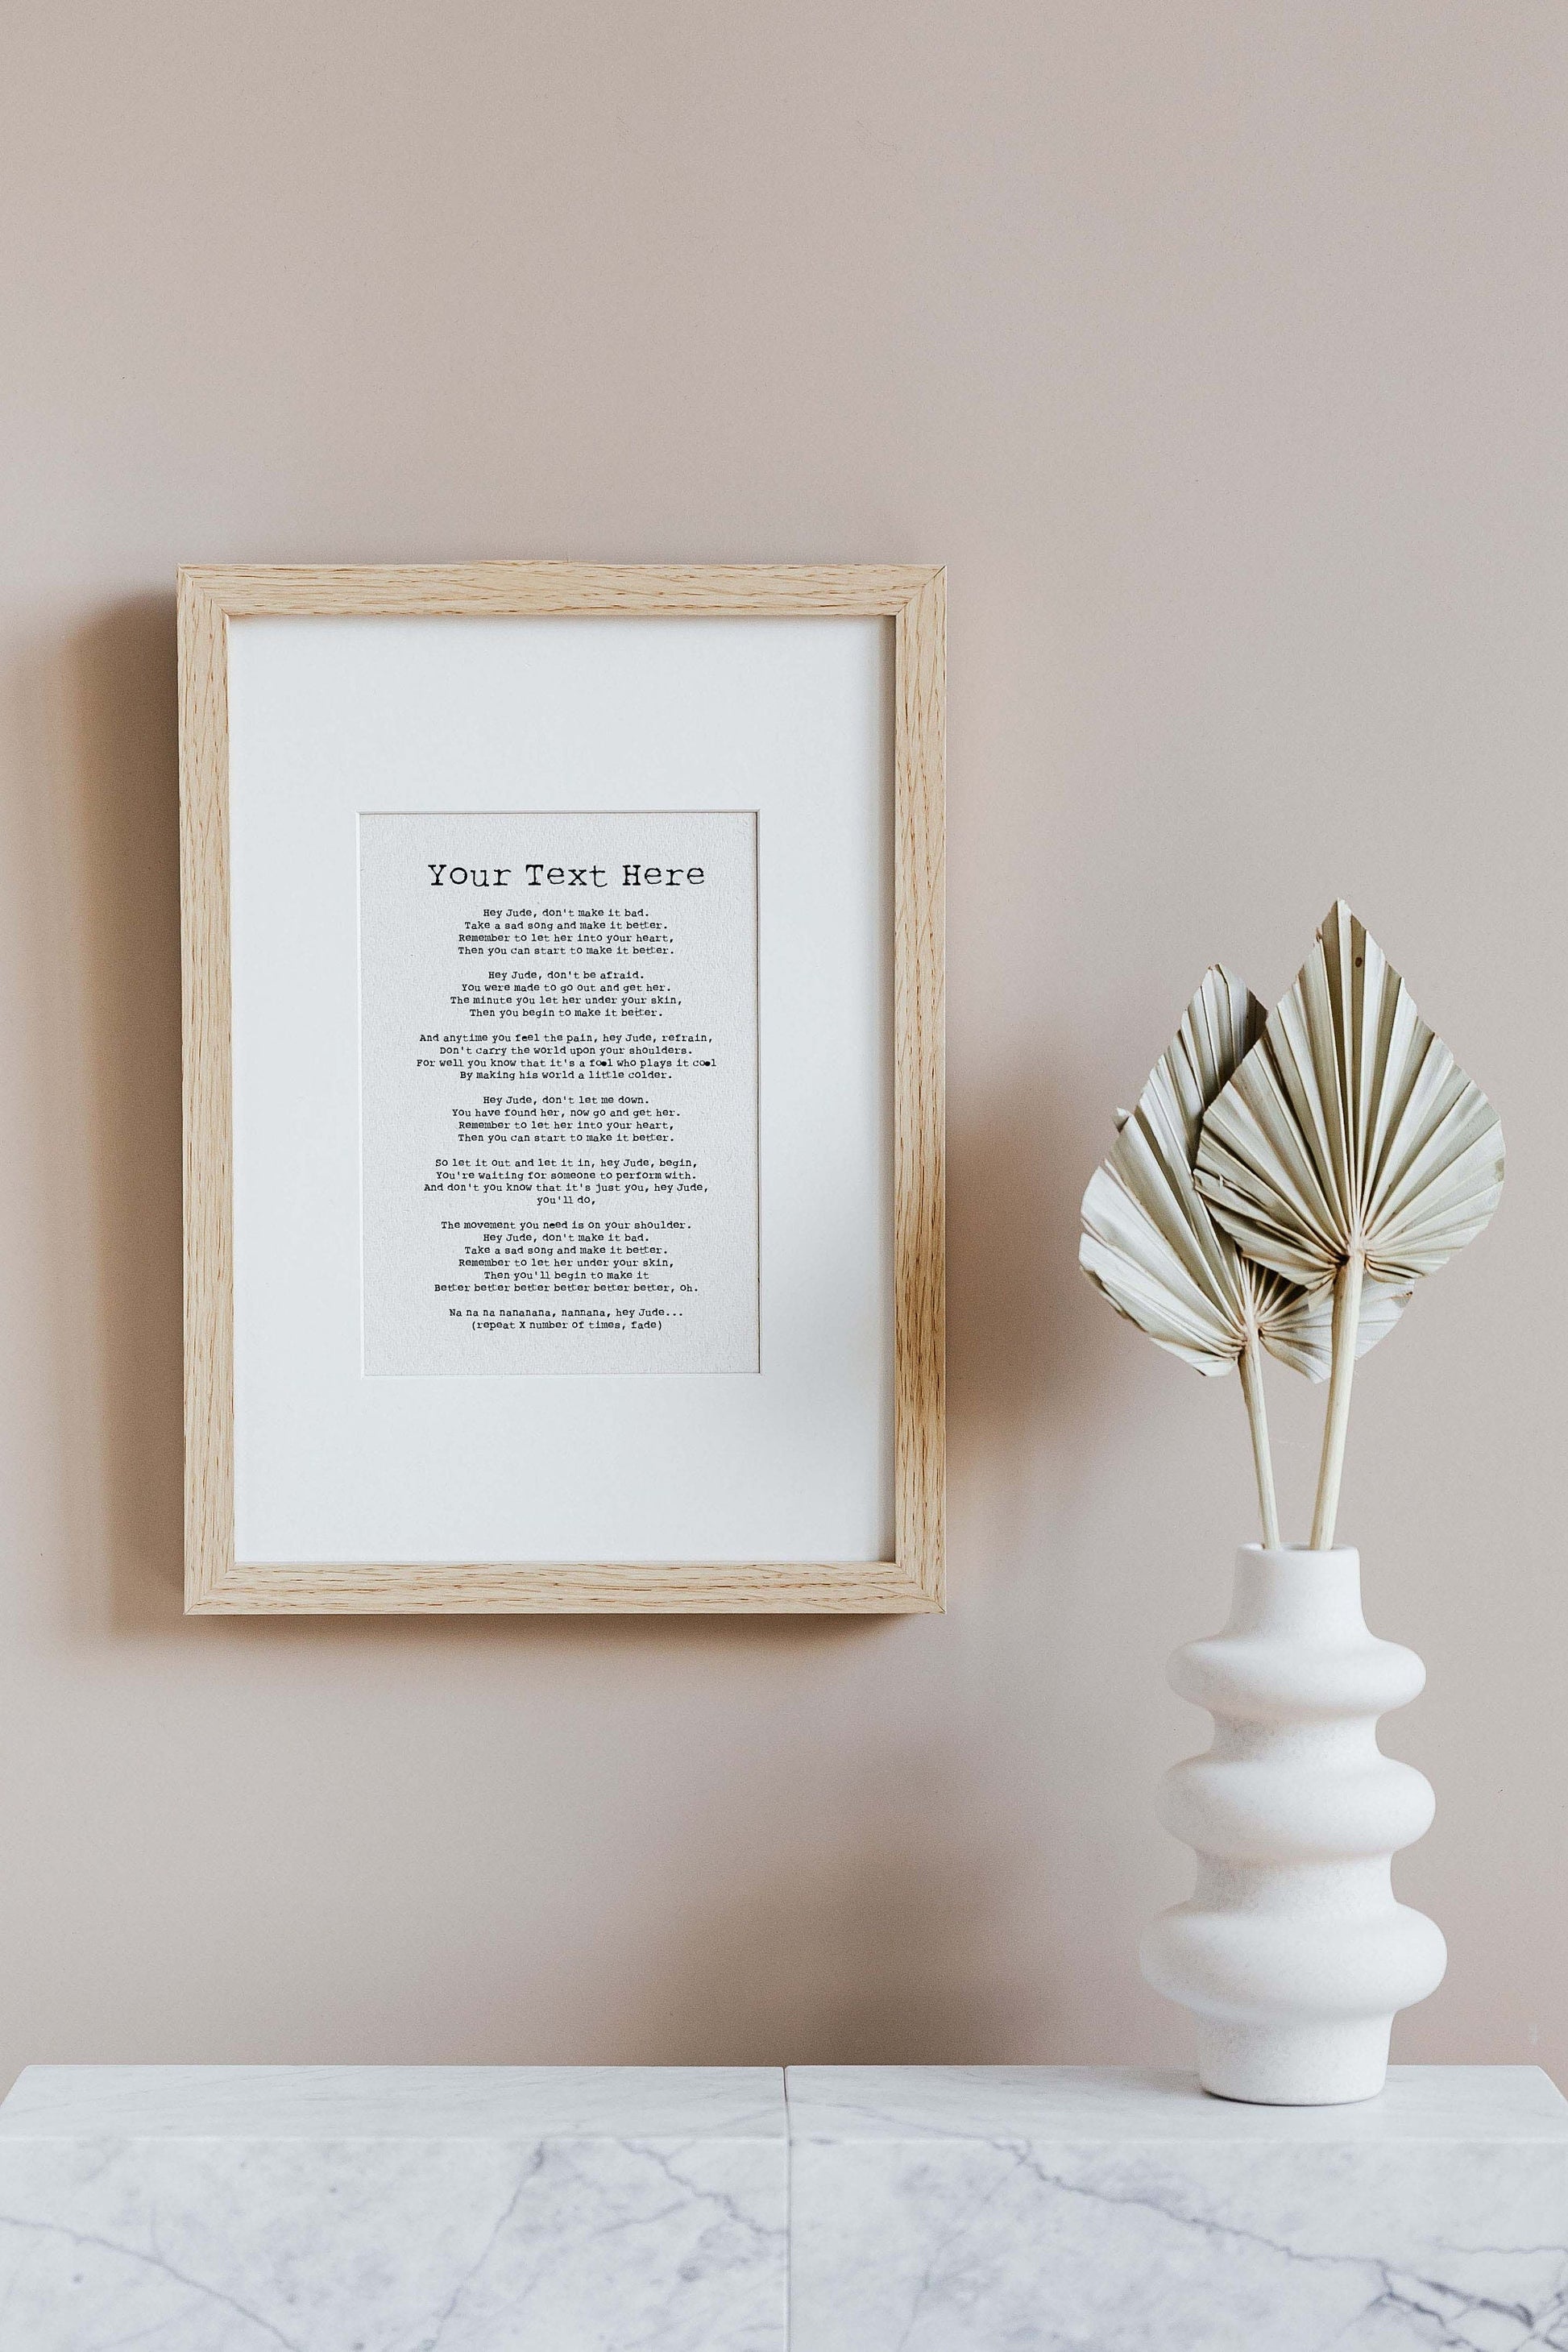 Custom Text Print Framed - Custom quote print - Customisable Print Framed - Custom Poem Print, Personalised printable - Typewriter Font